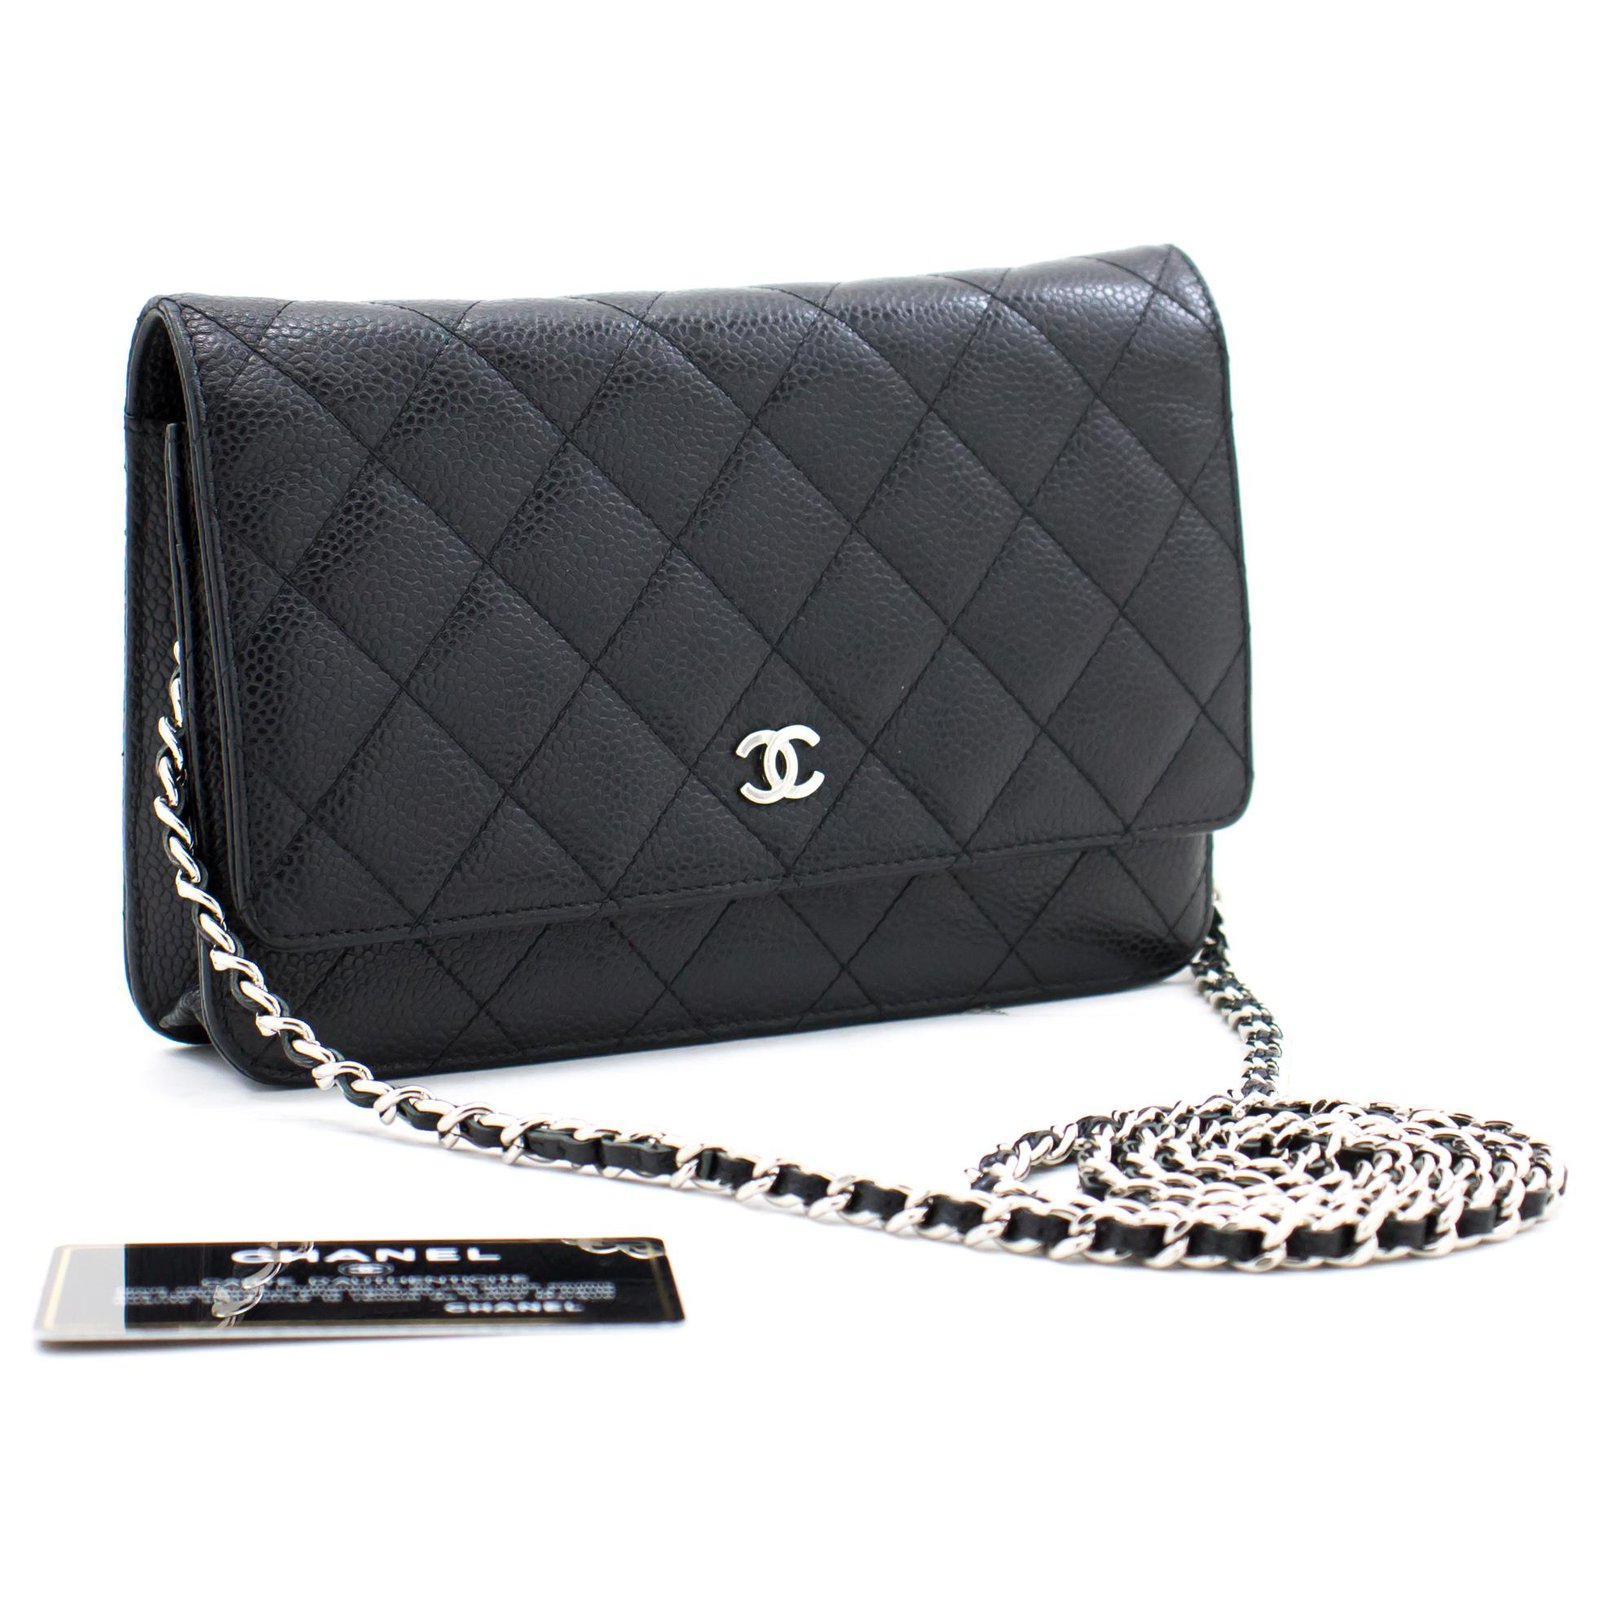 Chanel cross body bag Want it  Chanel cross body bag Chanel handbags Chanel  bag